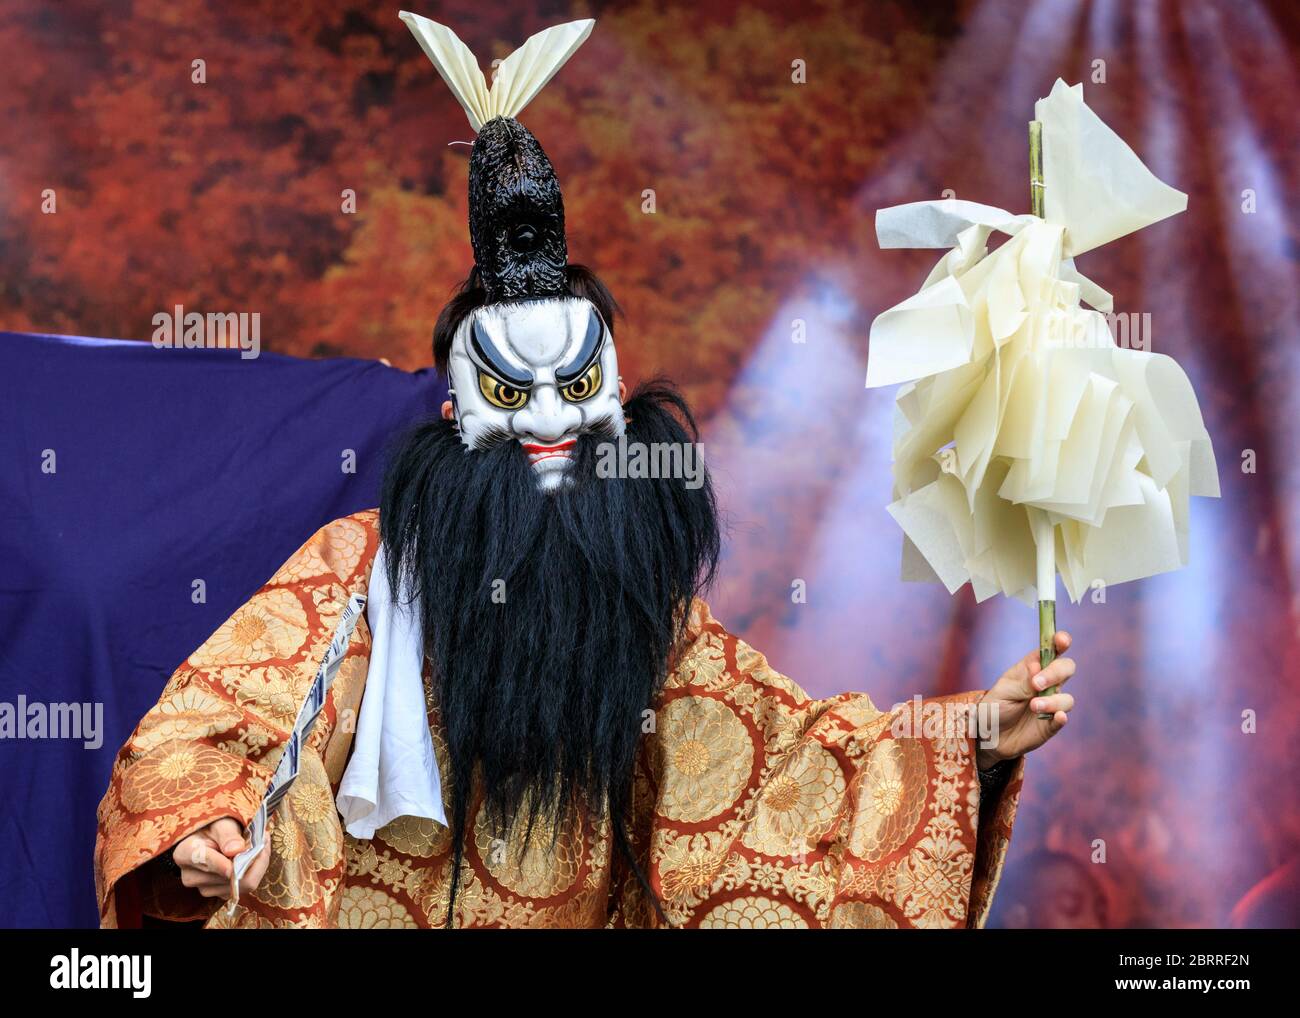 Japan Matsuri Festival with traditional dance, Japanese costumes and performances on Trafalgar Square, London, UK Stock Photo